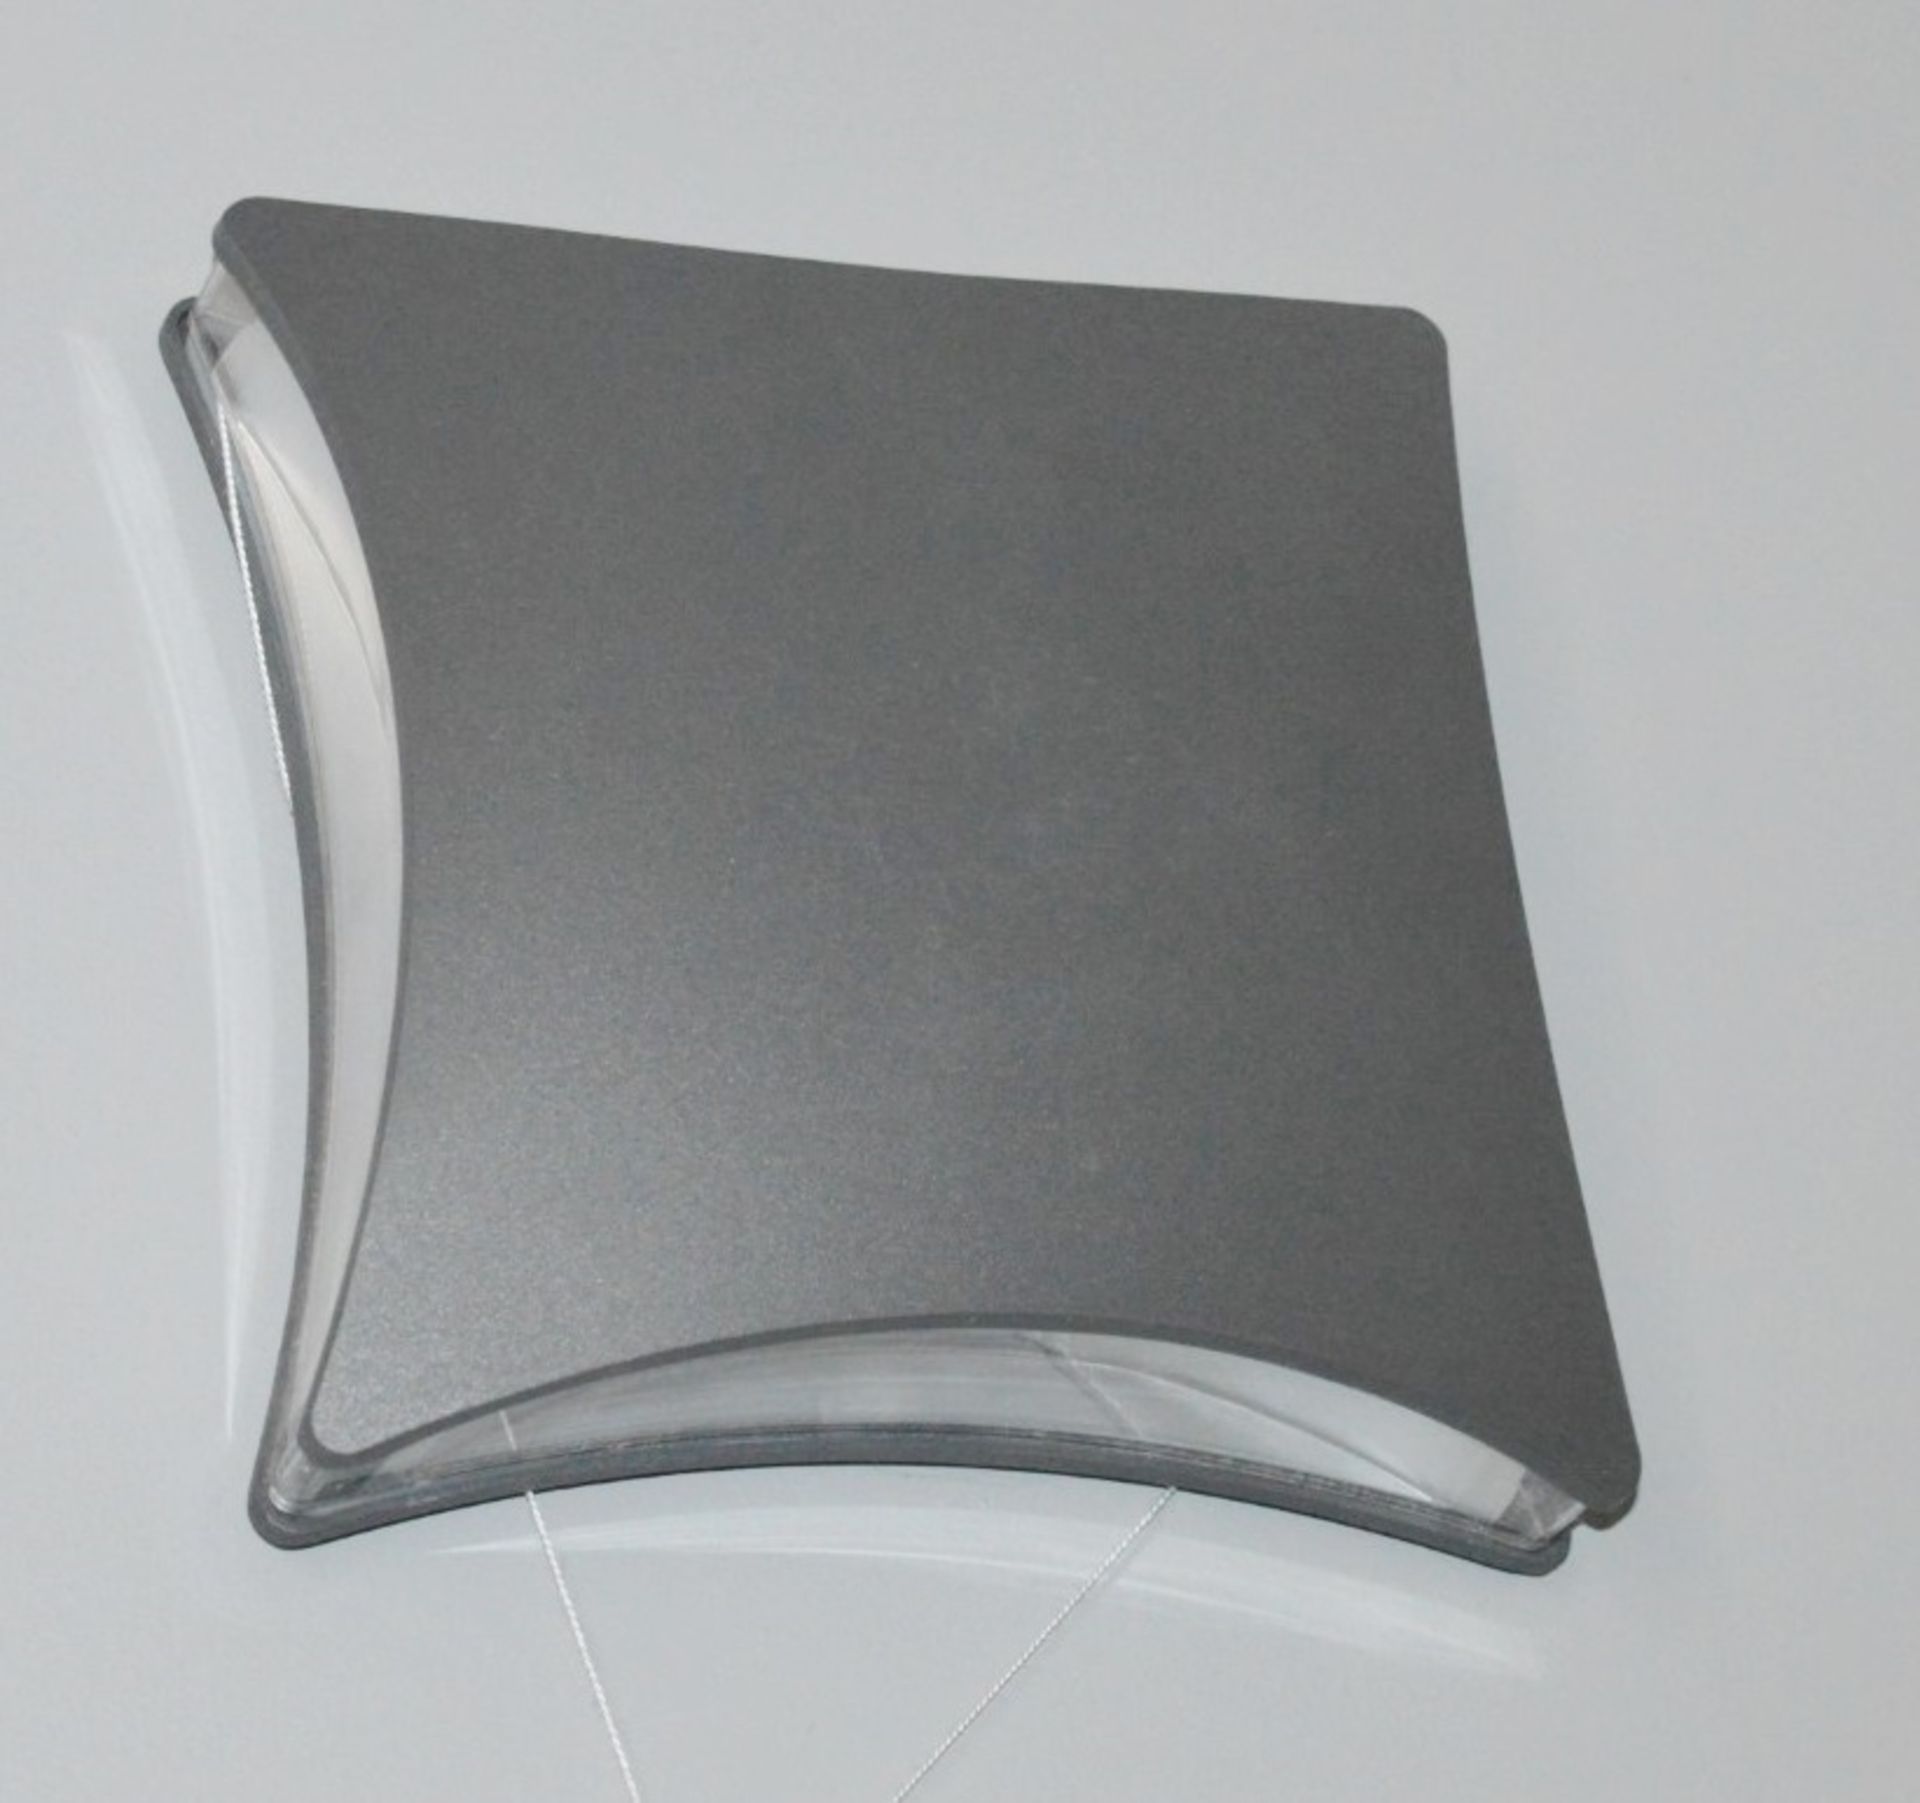 1 x Die Cast Aluminium Outdoor LED Light Fitting, Dark Grey Wall Bracket - Ex Display - RRP £108.00